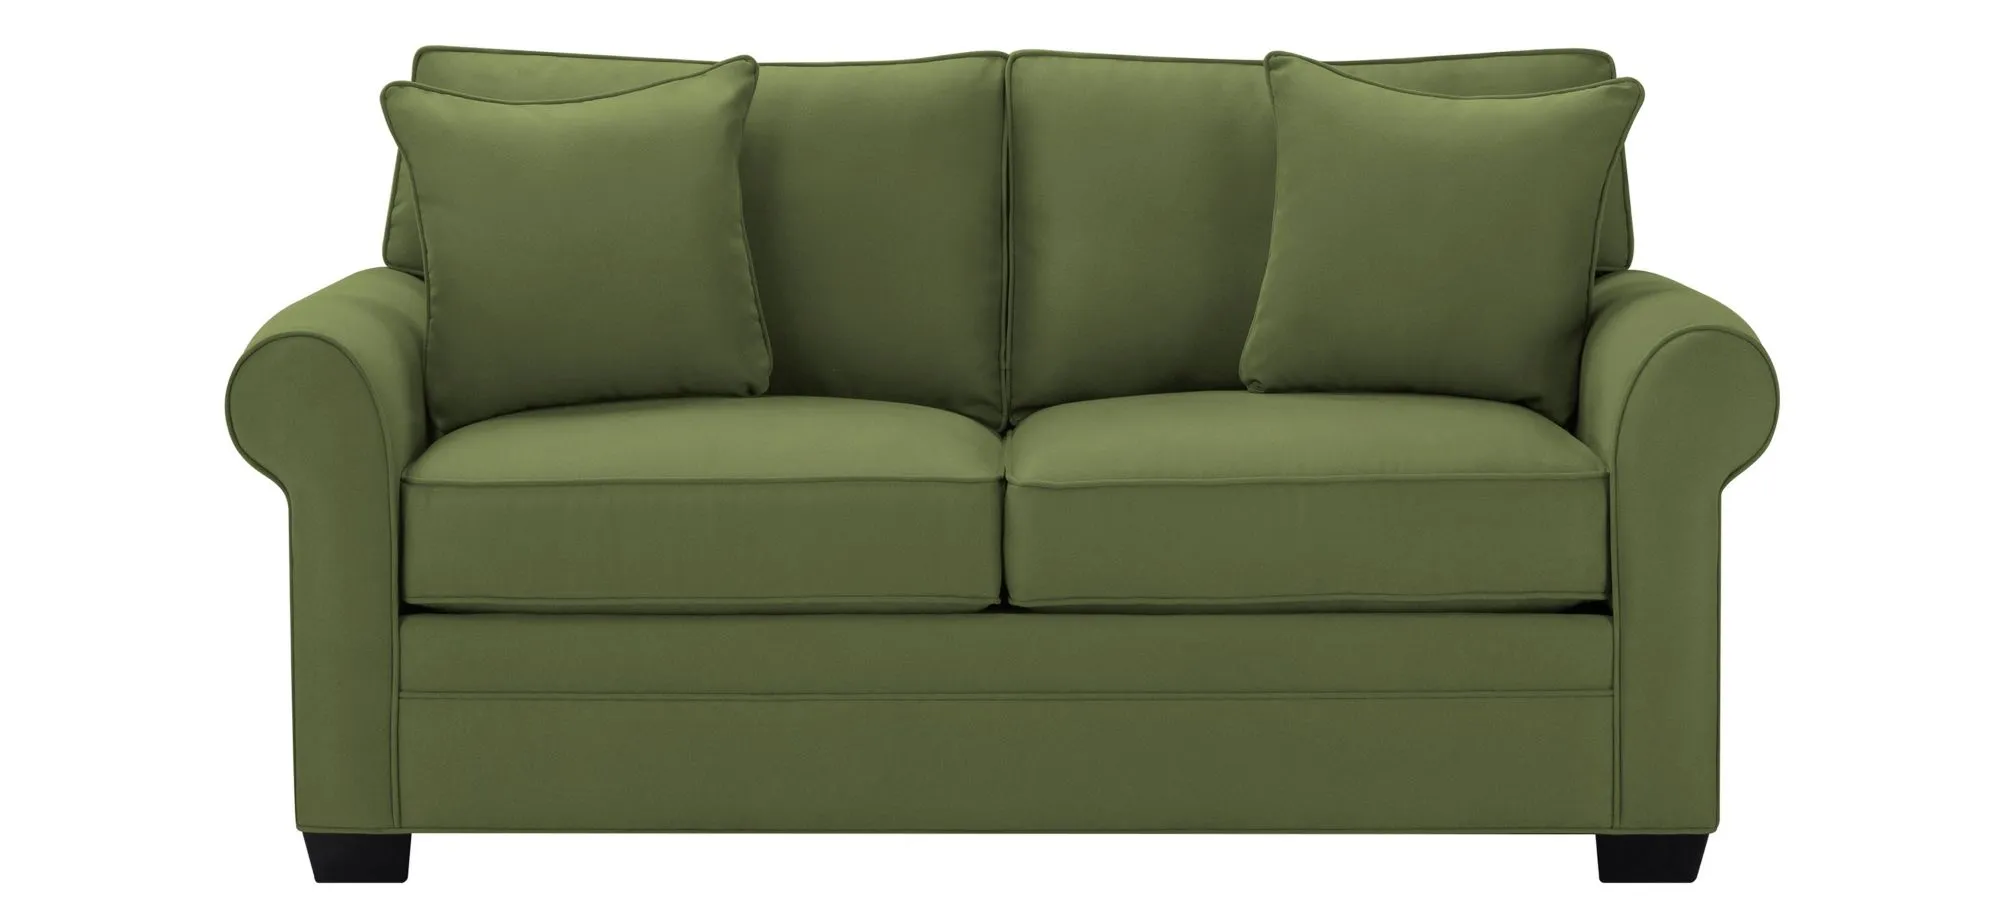 Glendora Full Sleeper Sofa in Suede So Soft Pine by H.M. Richards